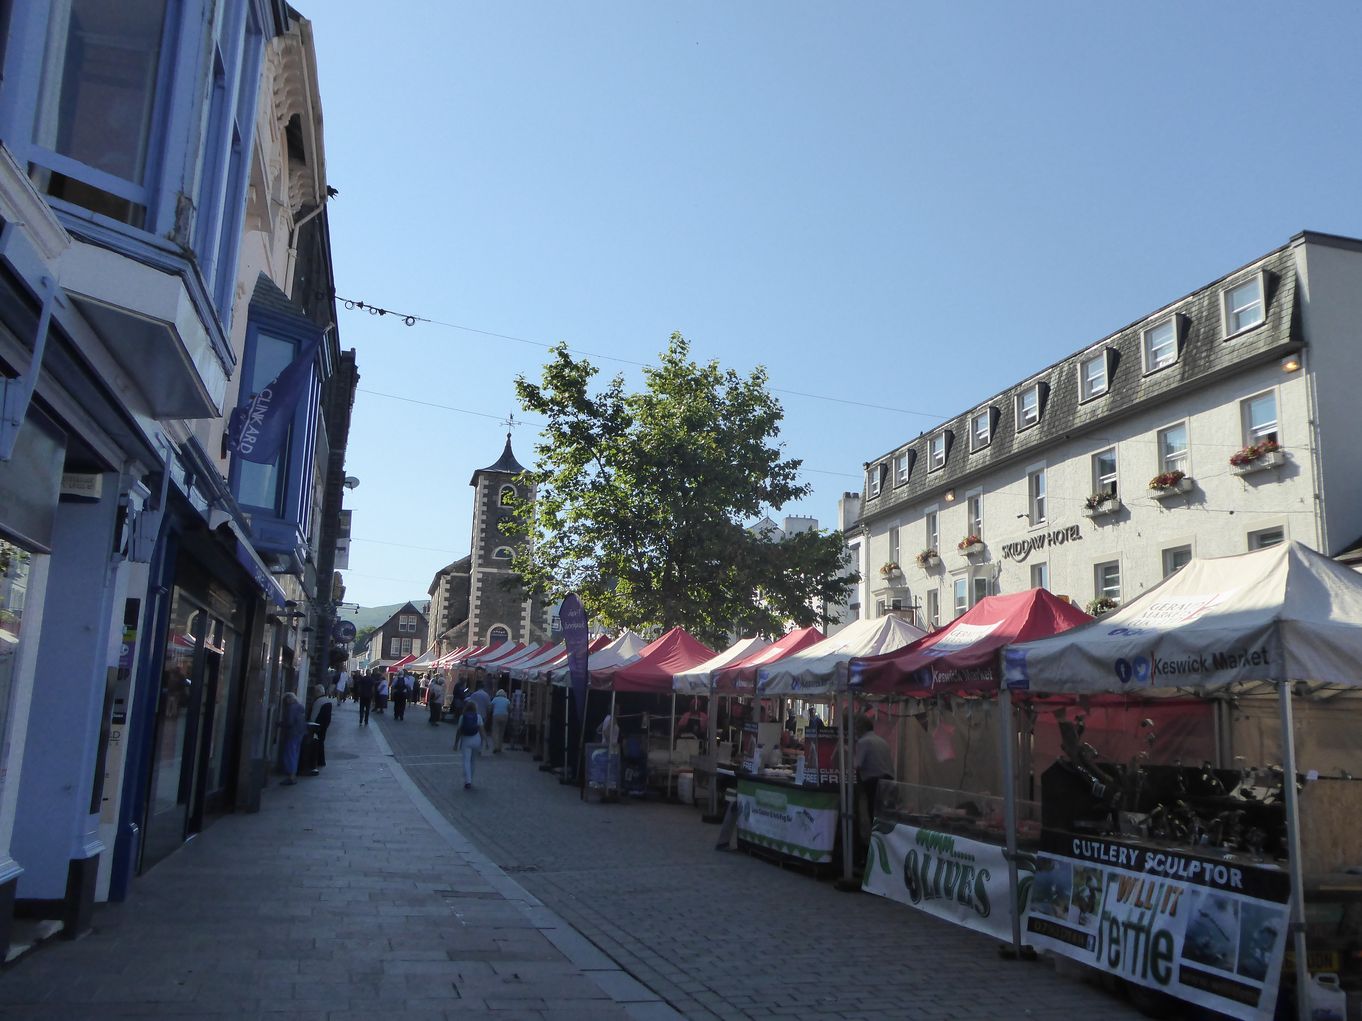 Market day in Keswick market square